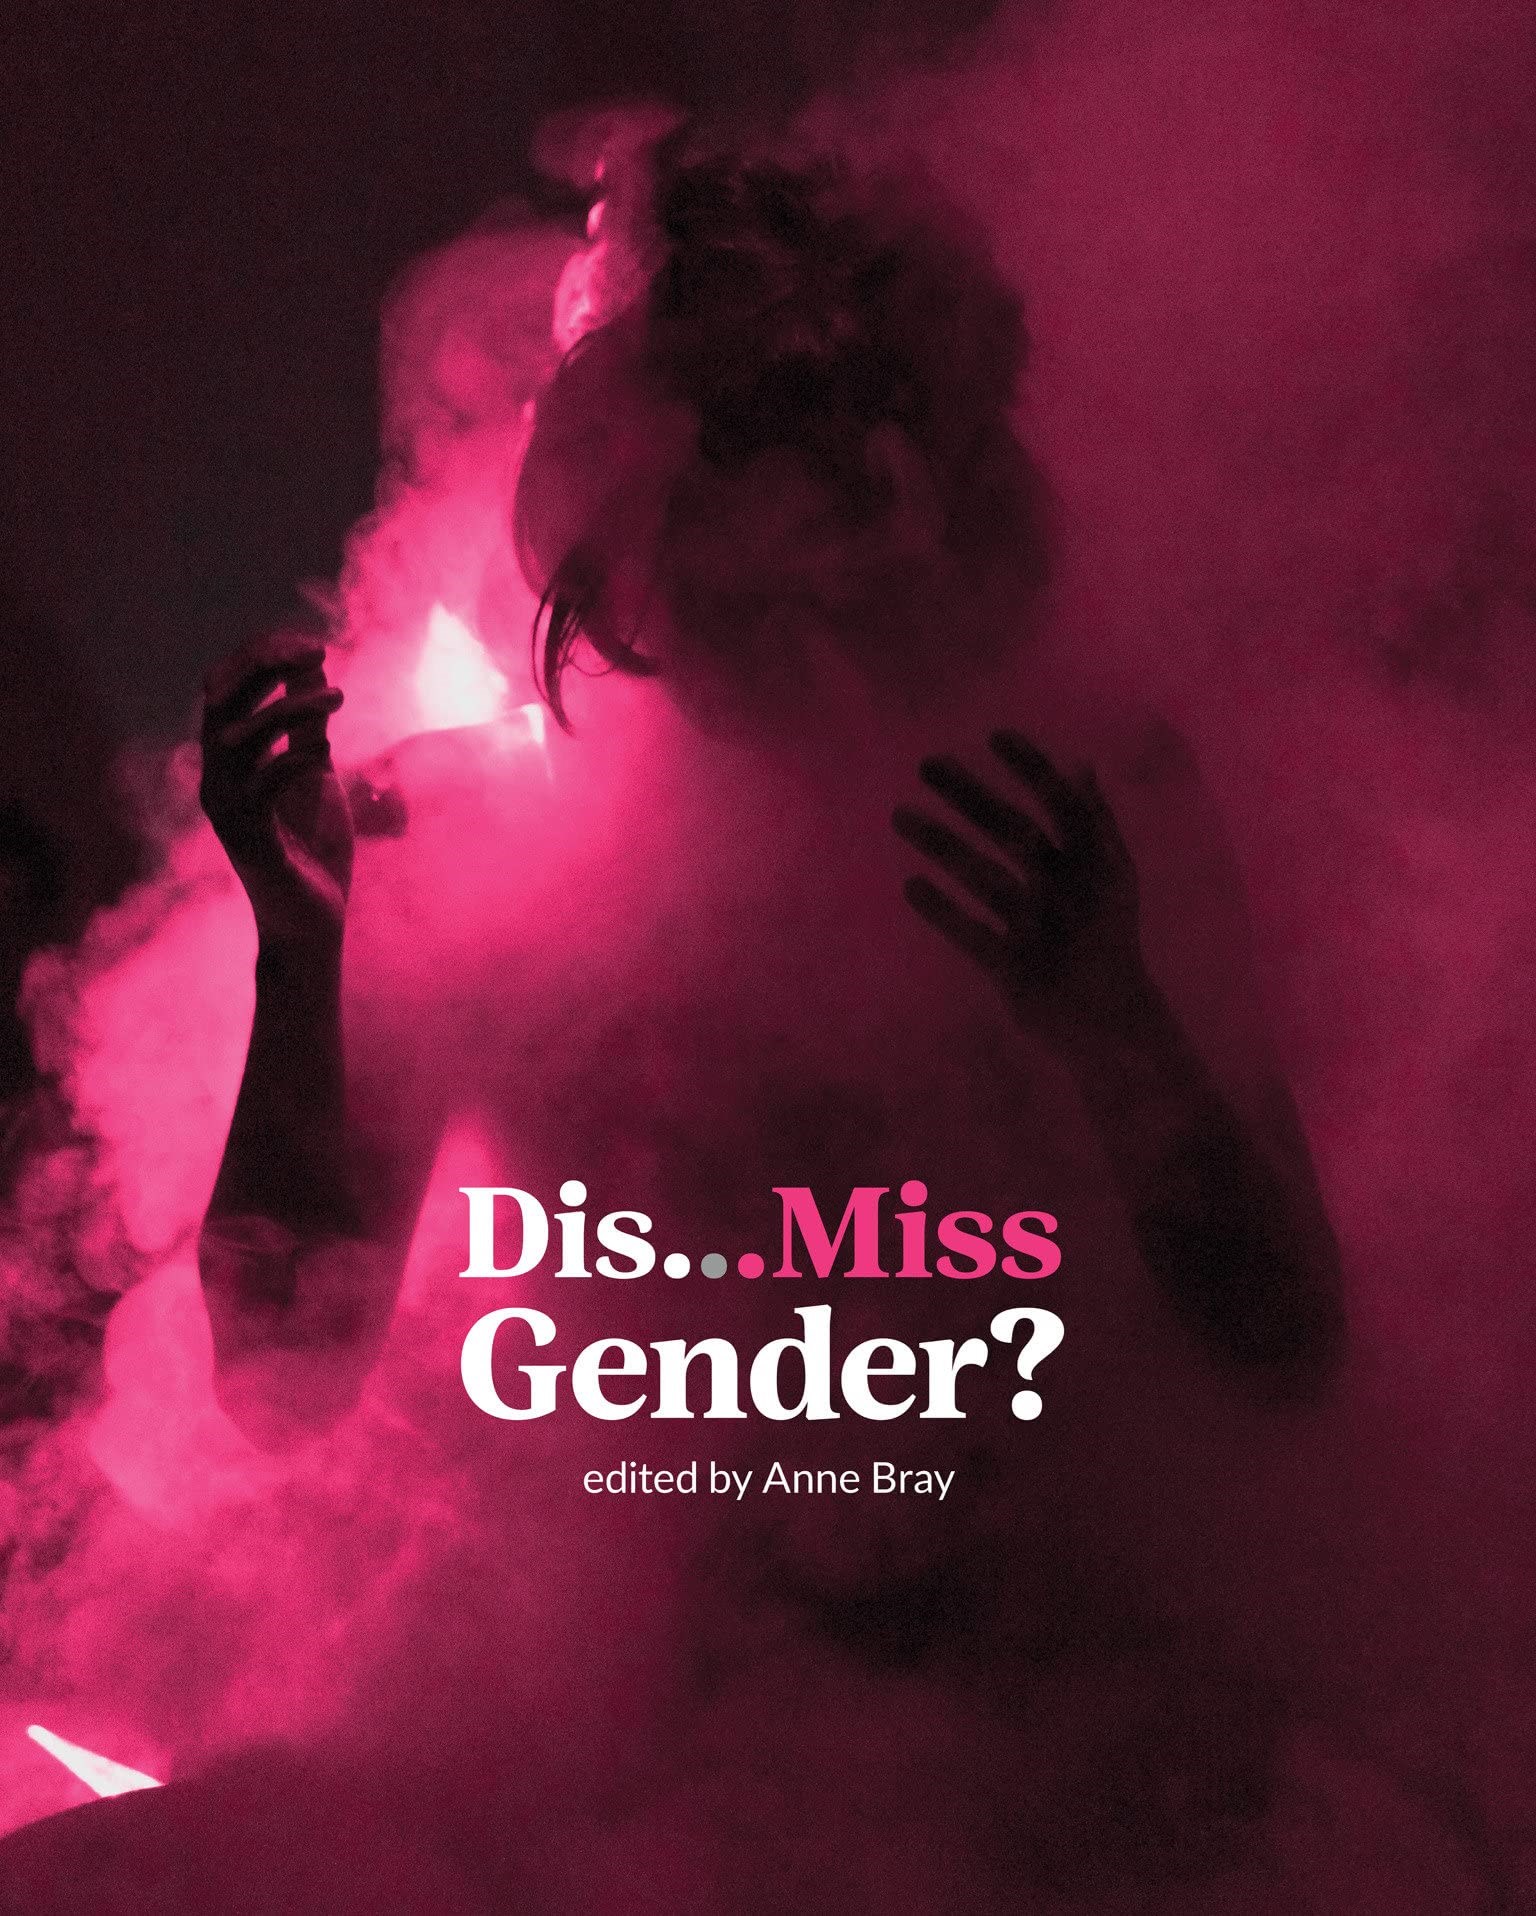 Dis…Miss Gender? edited by Anne Bray